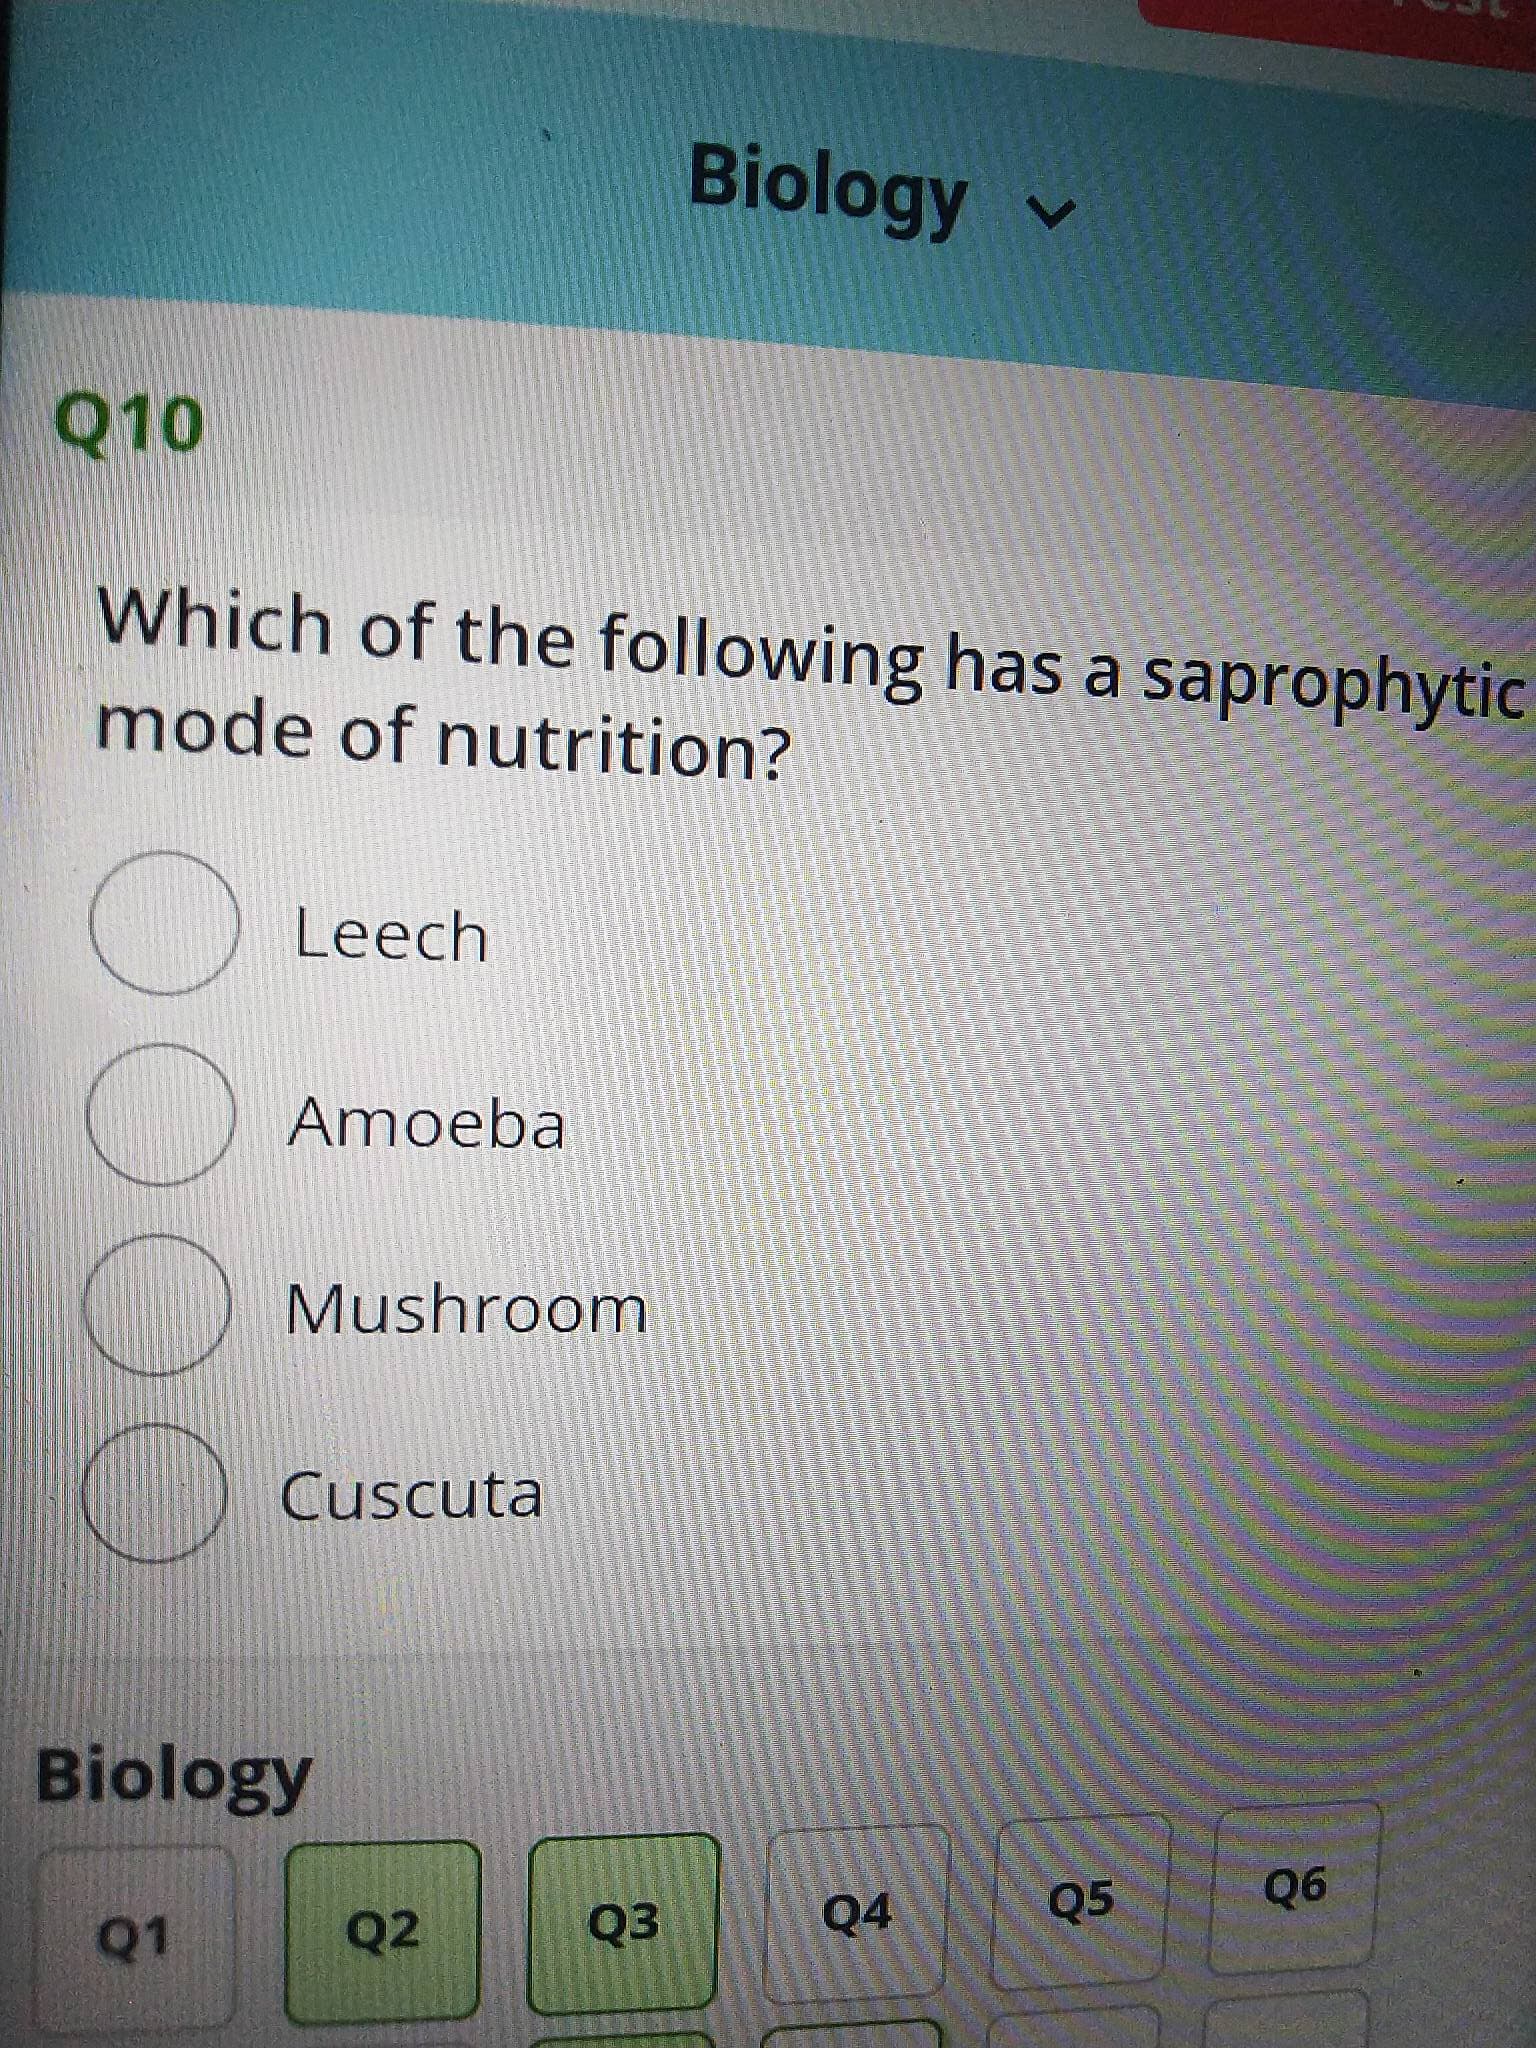 90
Biology
Which of the following has a saprophytic
mode of nutrition?
Leech
Amoeba
Mushroom
Cuscuta
Biology
Q4
Q5
Q2
Q3
